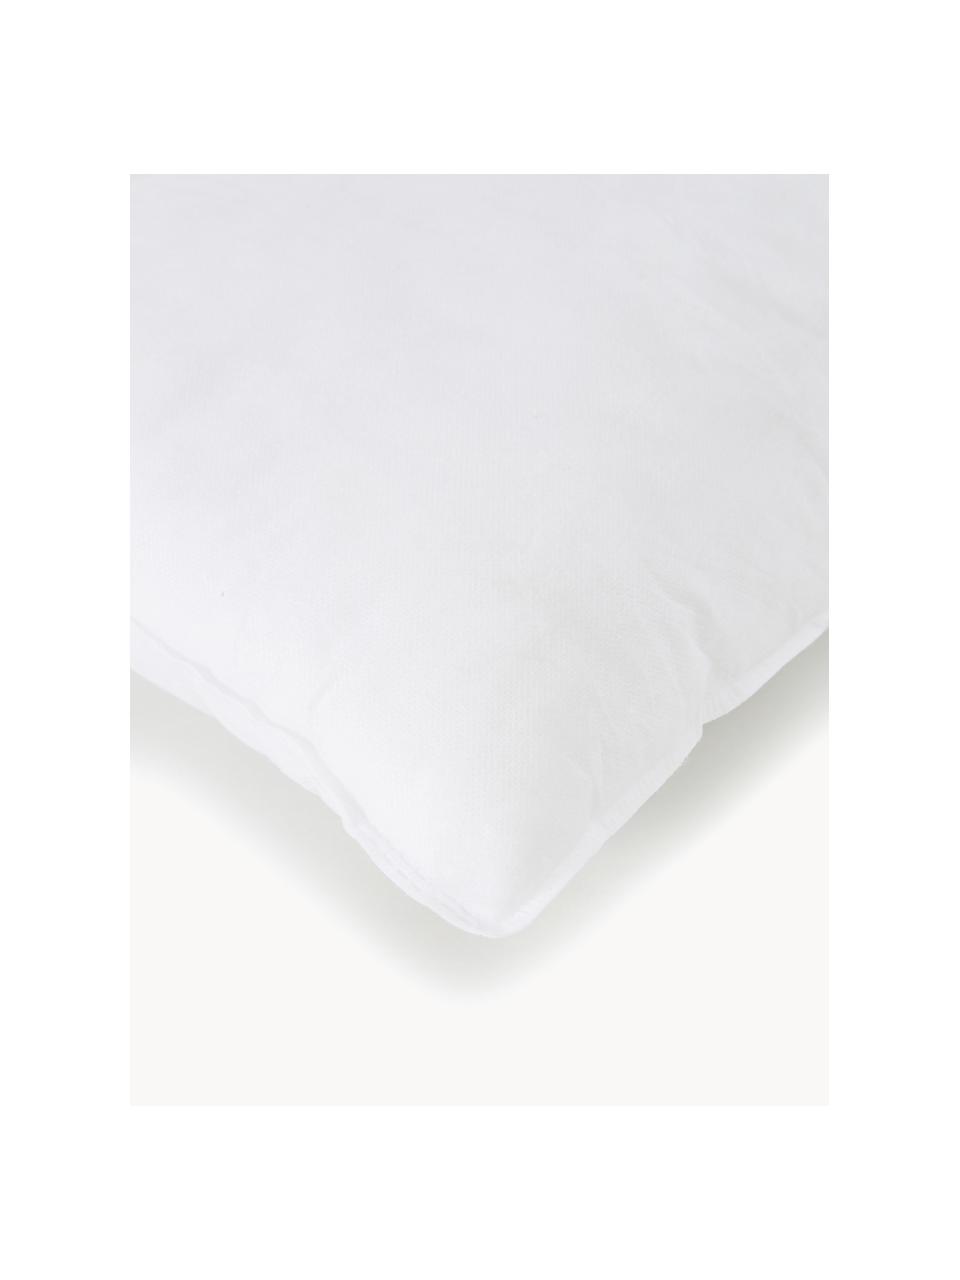 Kissen-Inlett Egret, 30x60, Polyester-Füllung, Bezug: Kunstfaser, Weiß, B 30 x L 60 cm